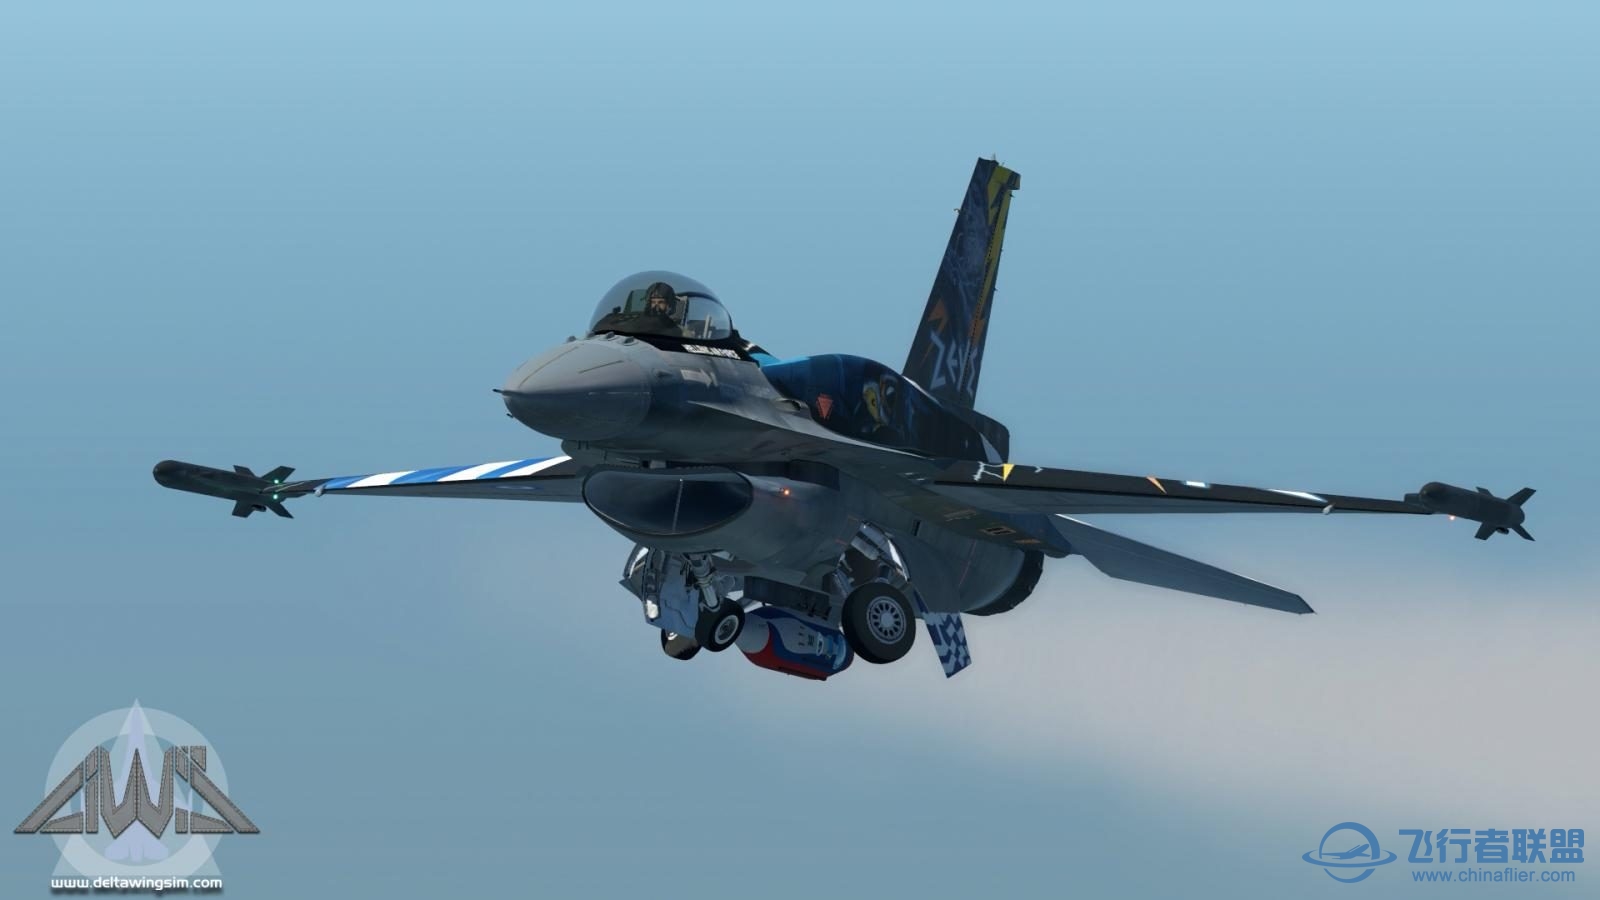 DeltaWing Simulations 发布 F-16C XPL-3270 